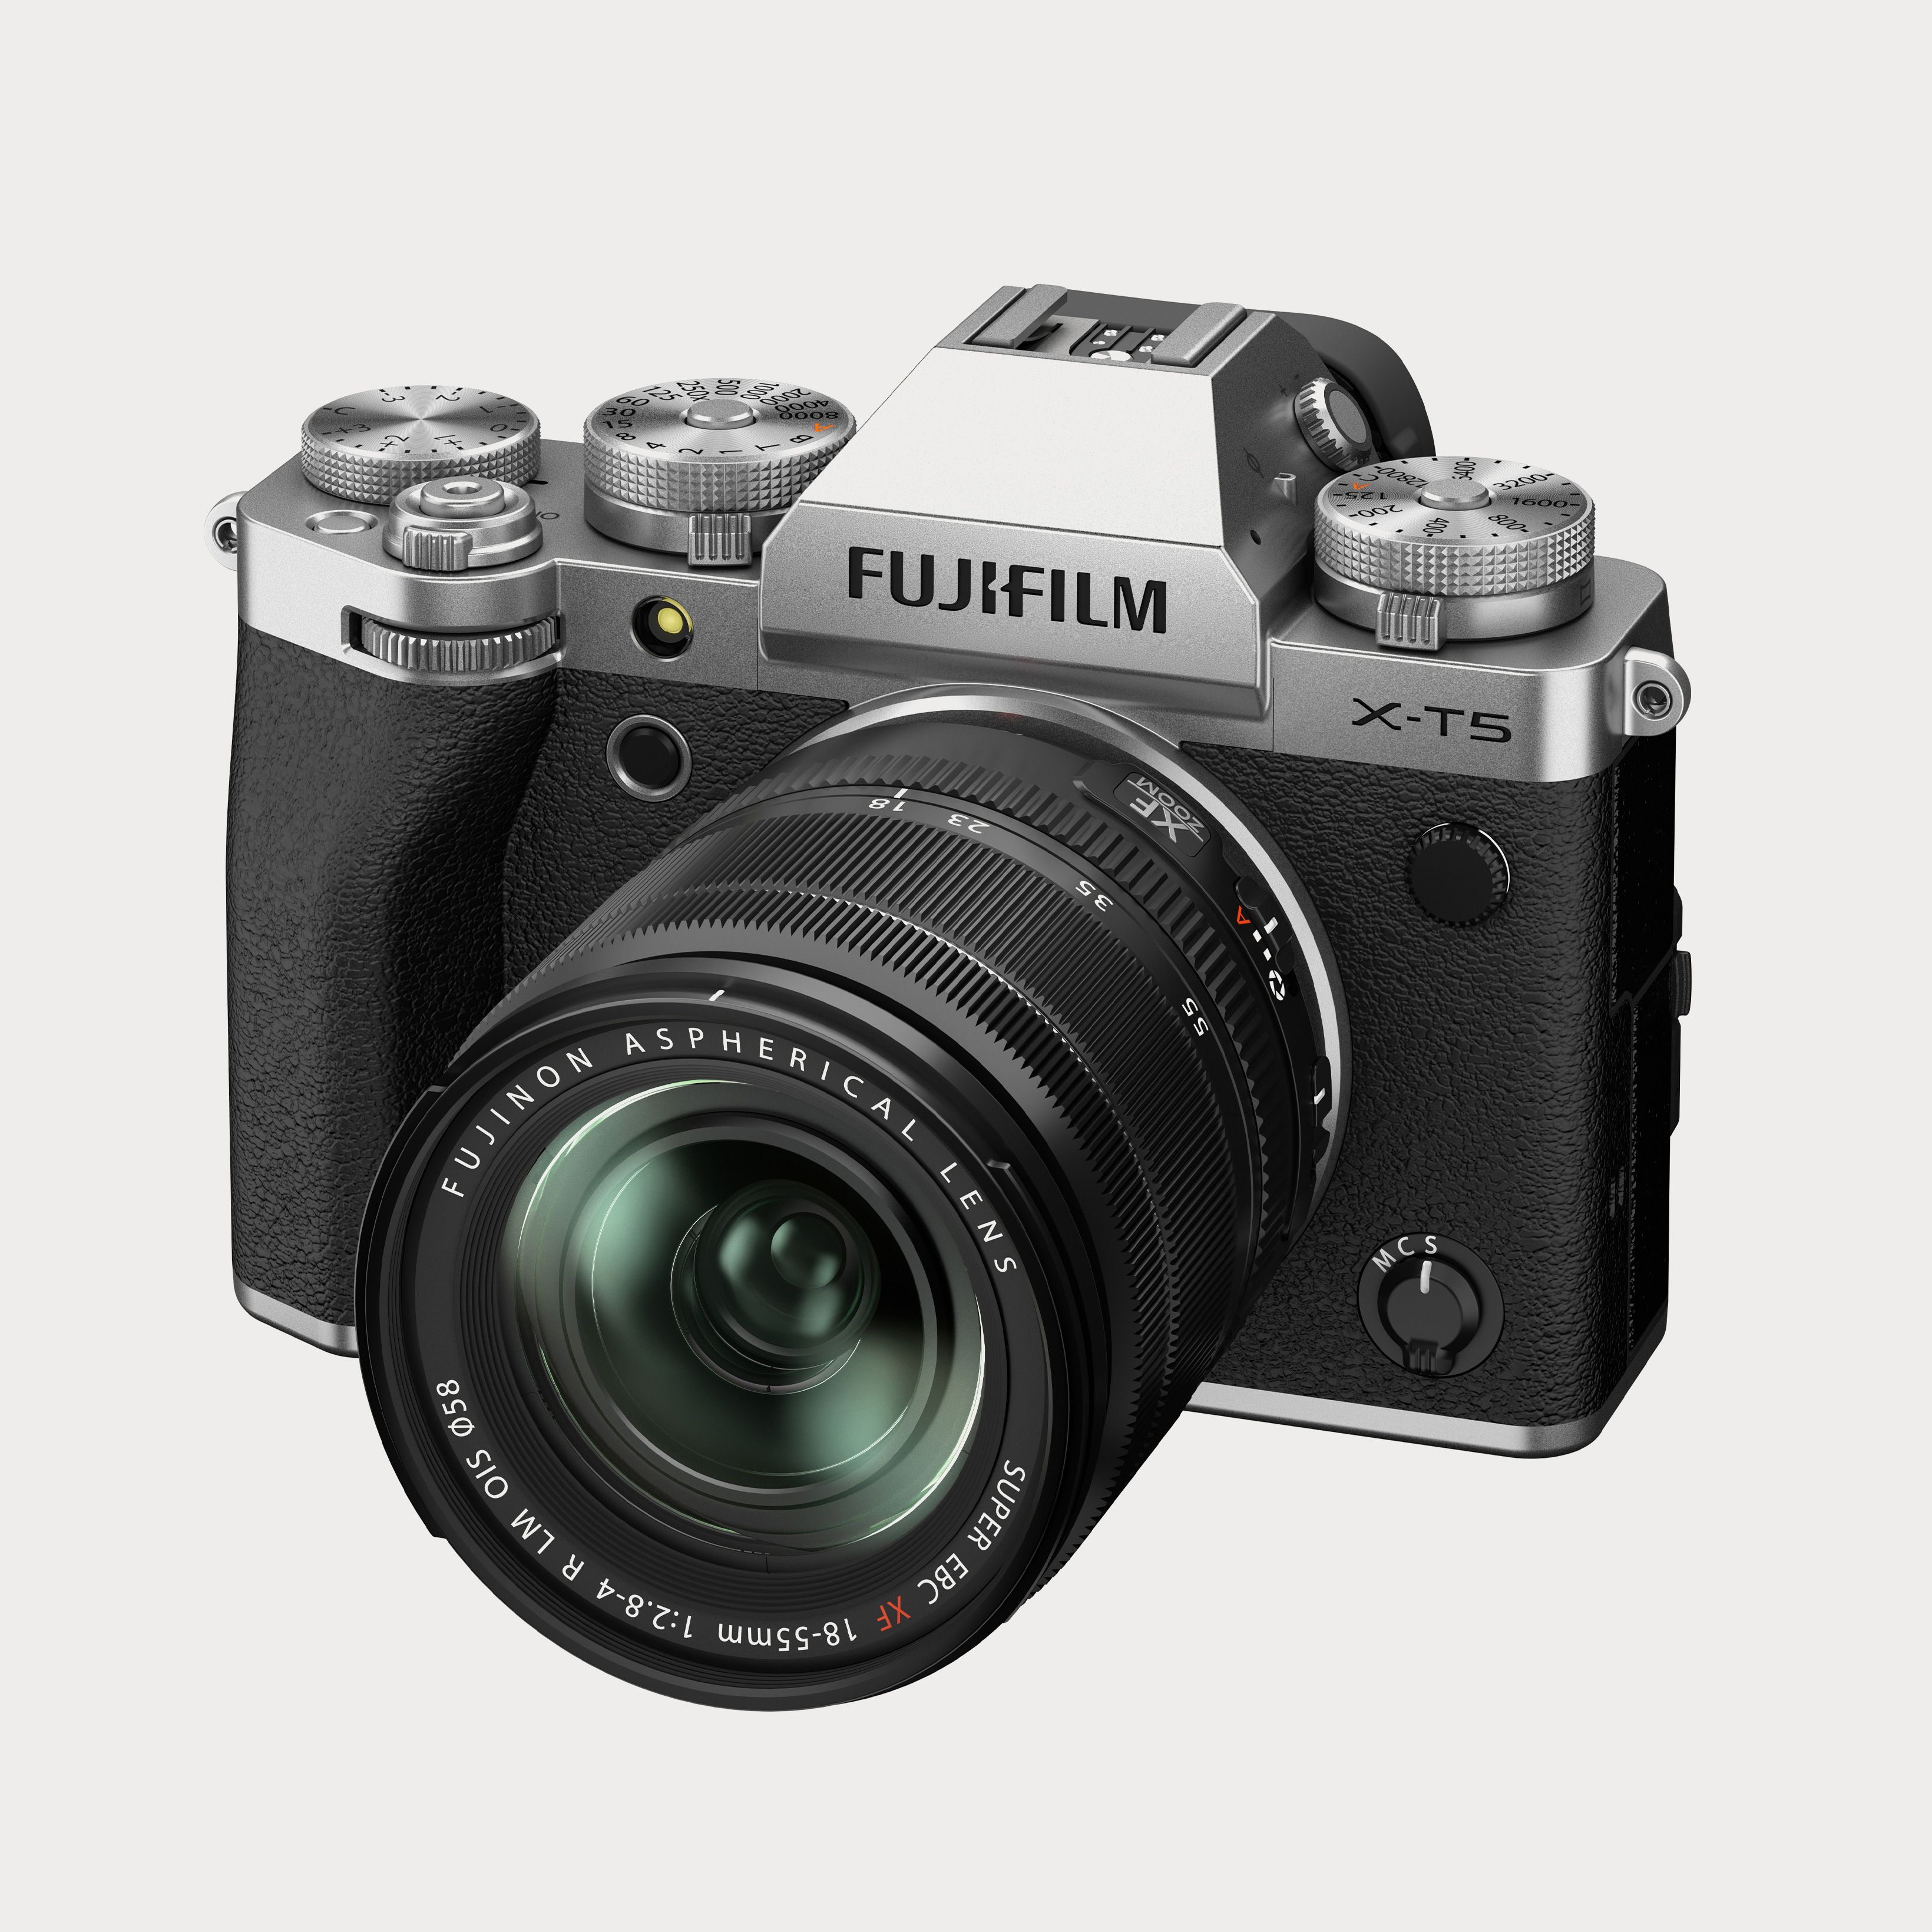 Fujifilm X-T5 Mirrorless Camera - Black / with Fujifilm XF18-55mm F2.8-4 R LM  OIS Lens Kit | Moment